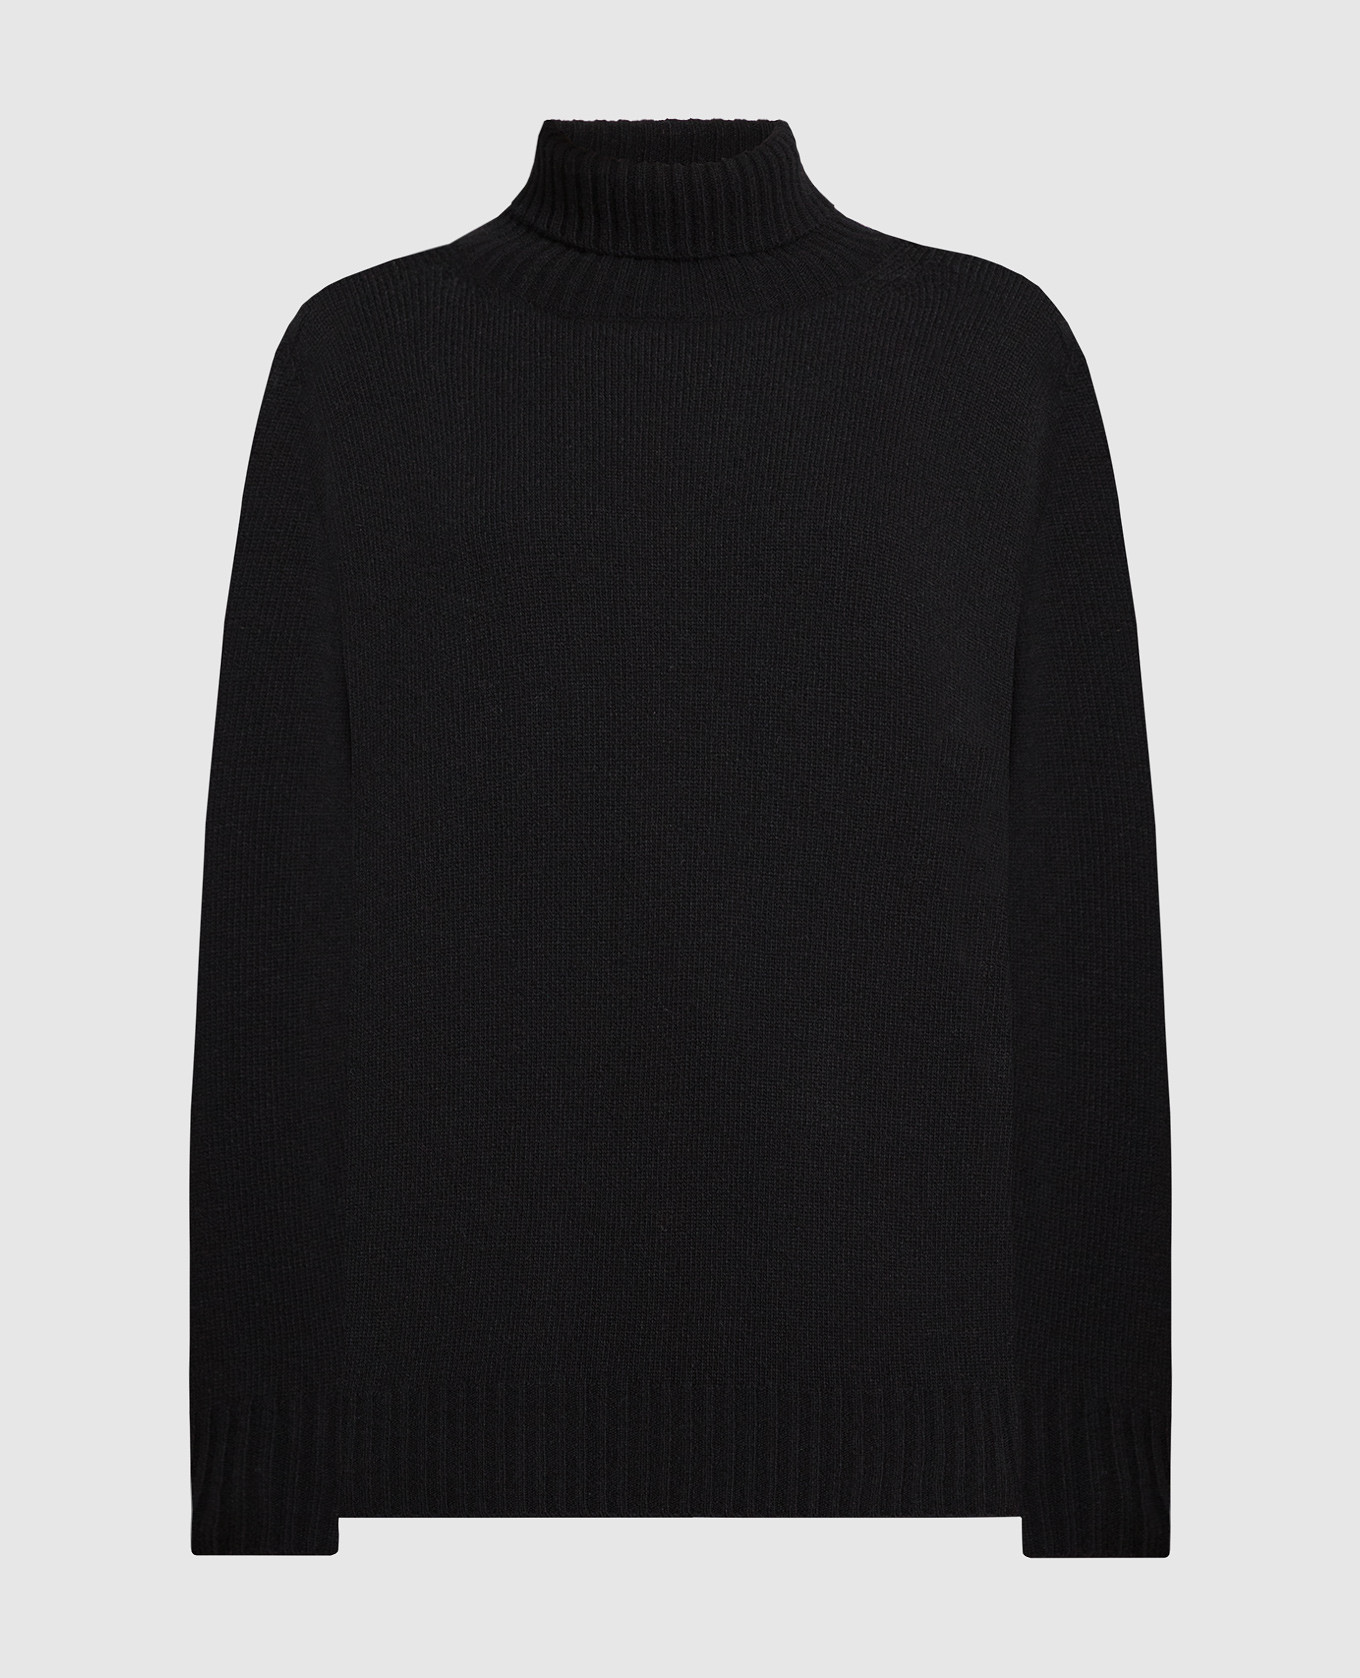 Manu black wool and cashmere sweater